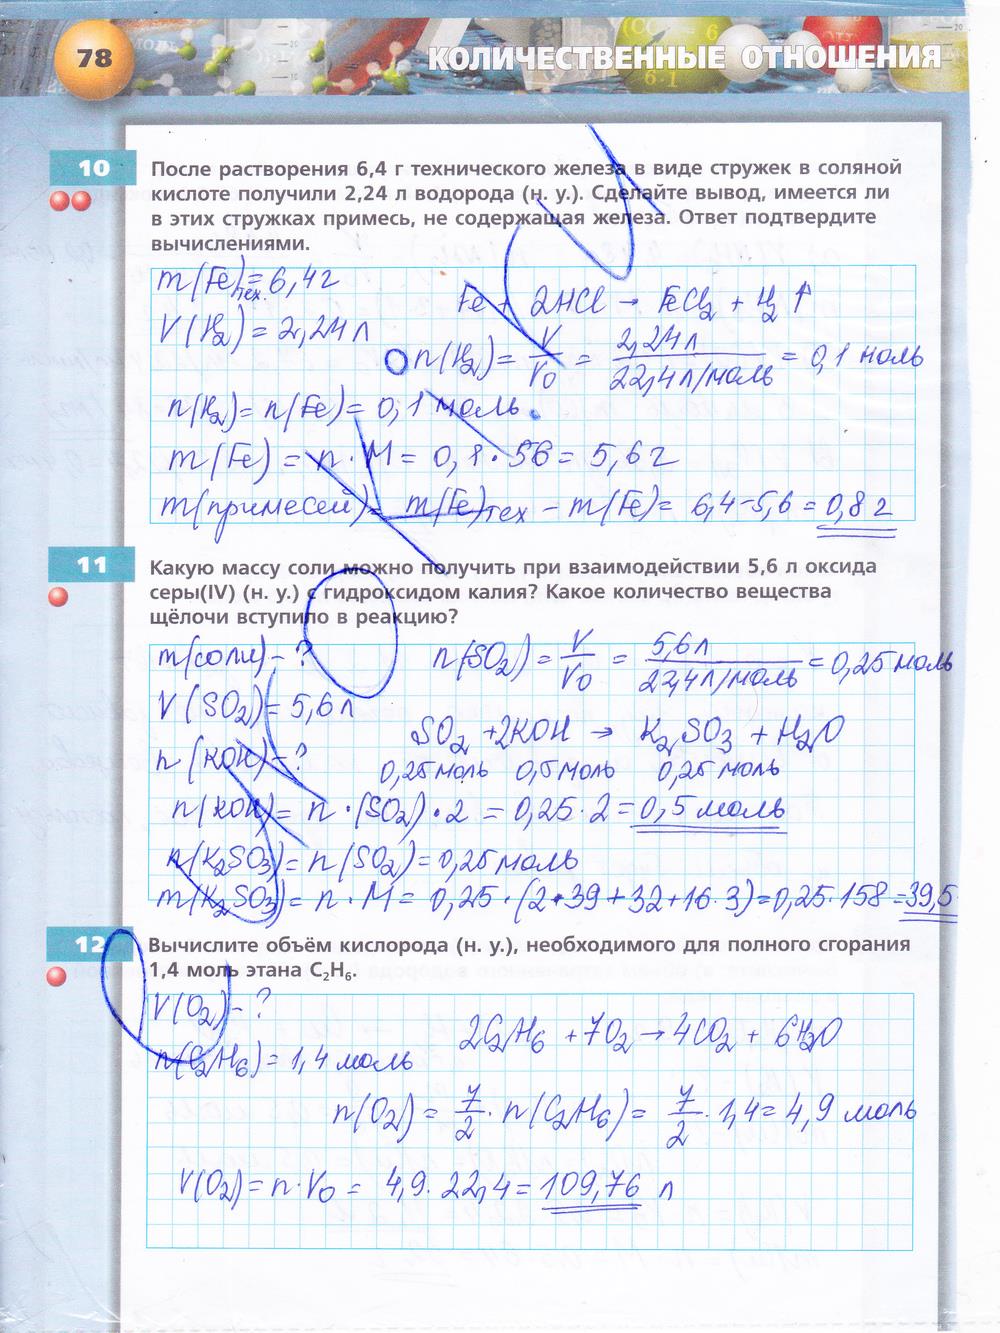 гдз 8 класс тетрадь-тренажёр страница 78 химия Гара